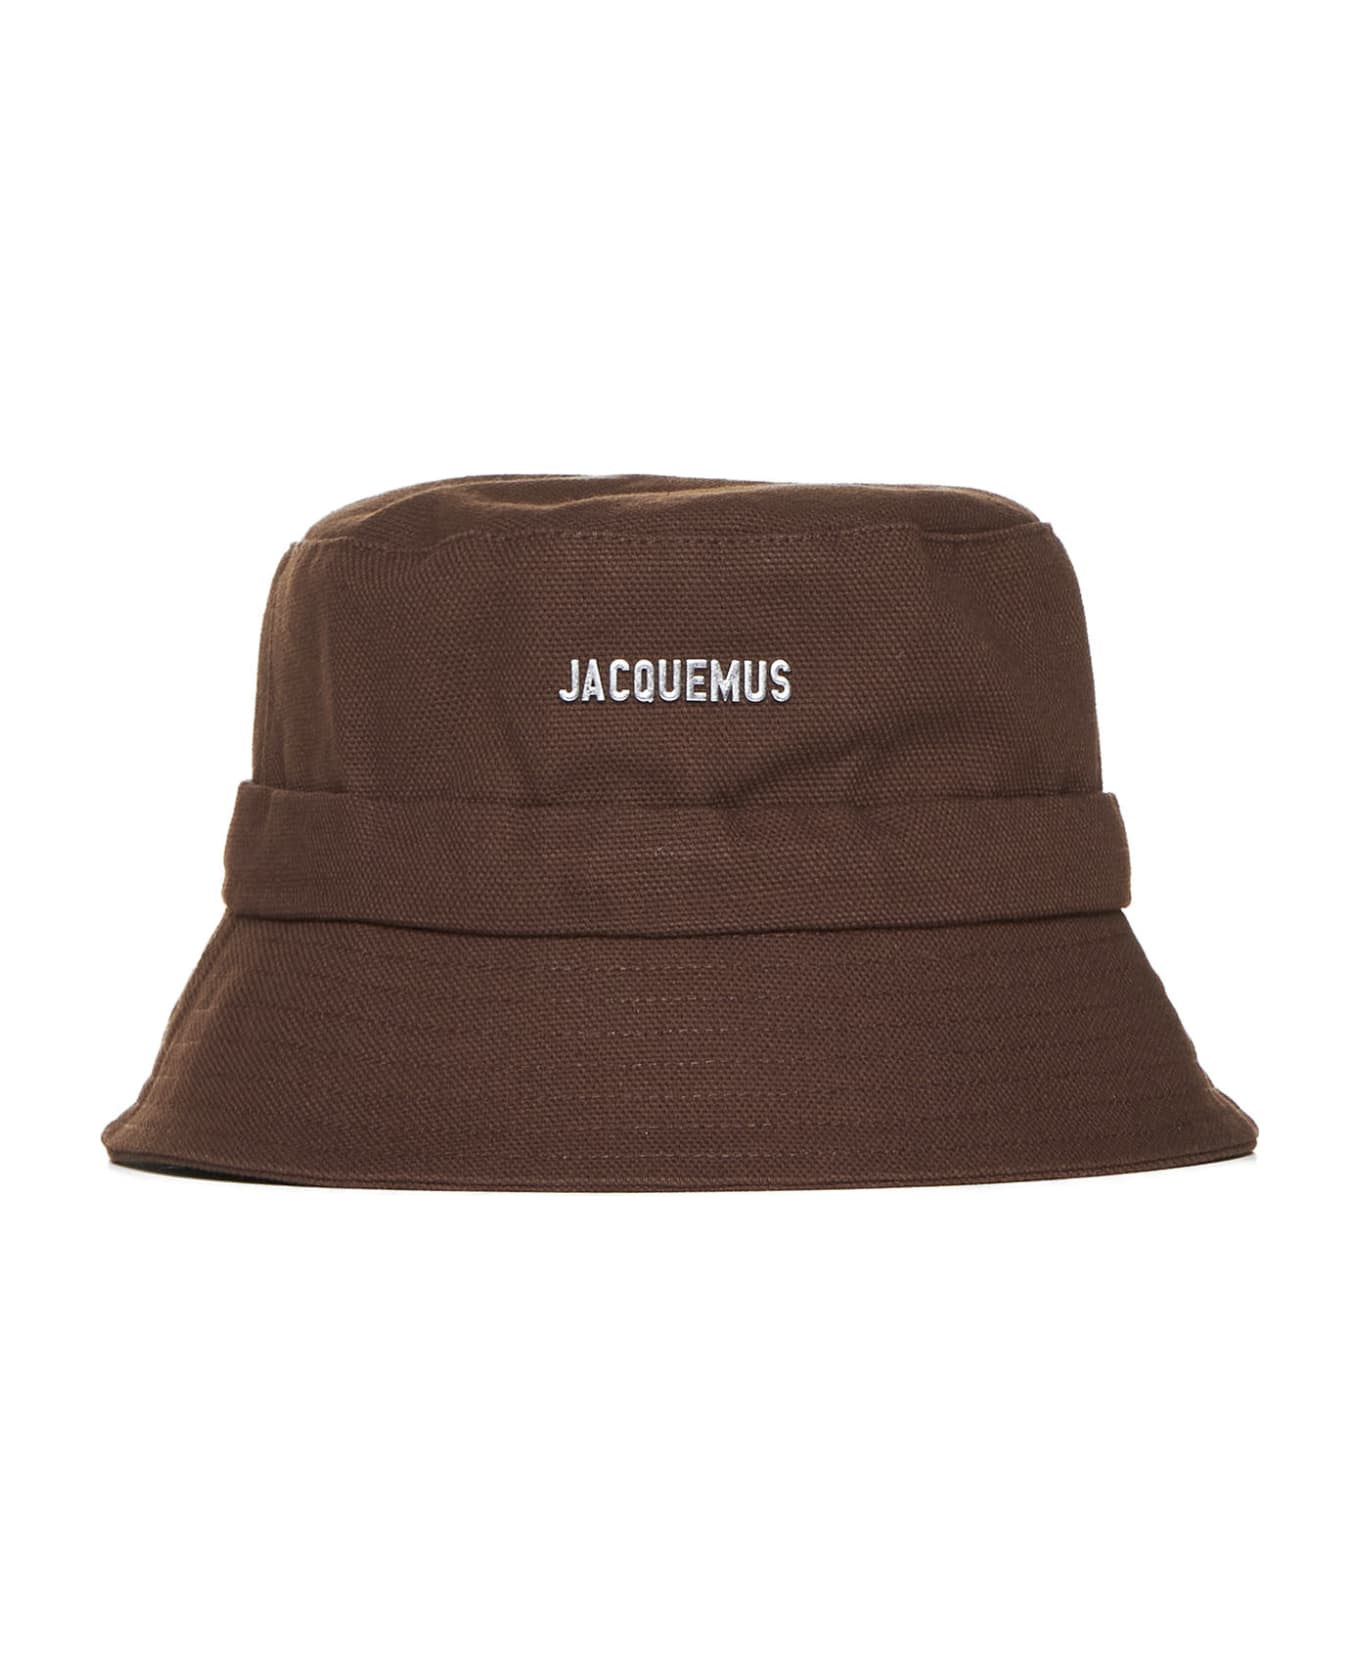 Jacquemus Hat - Brown